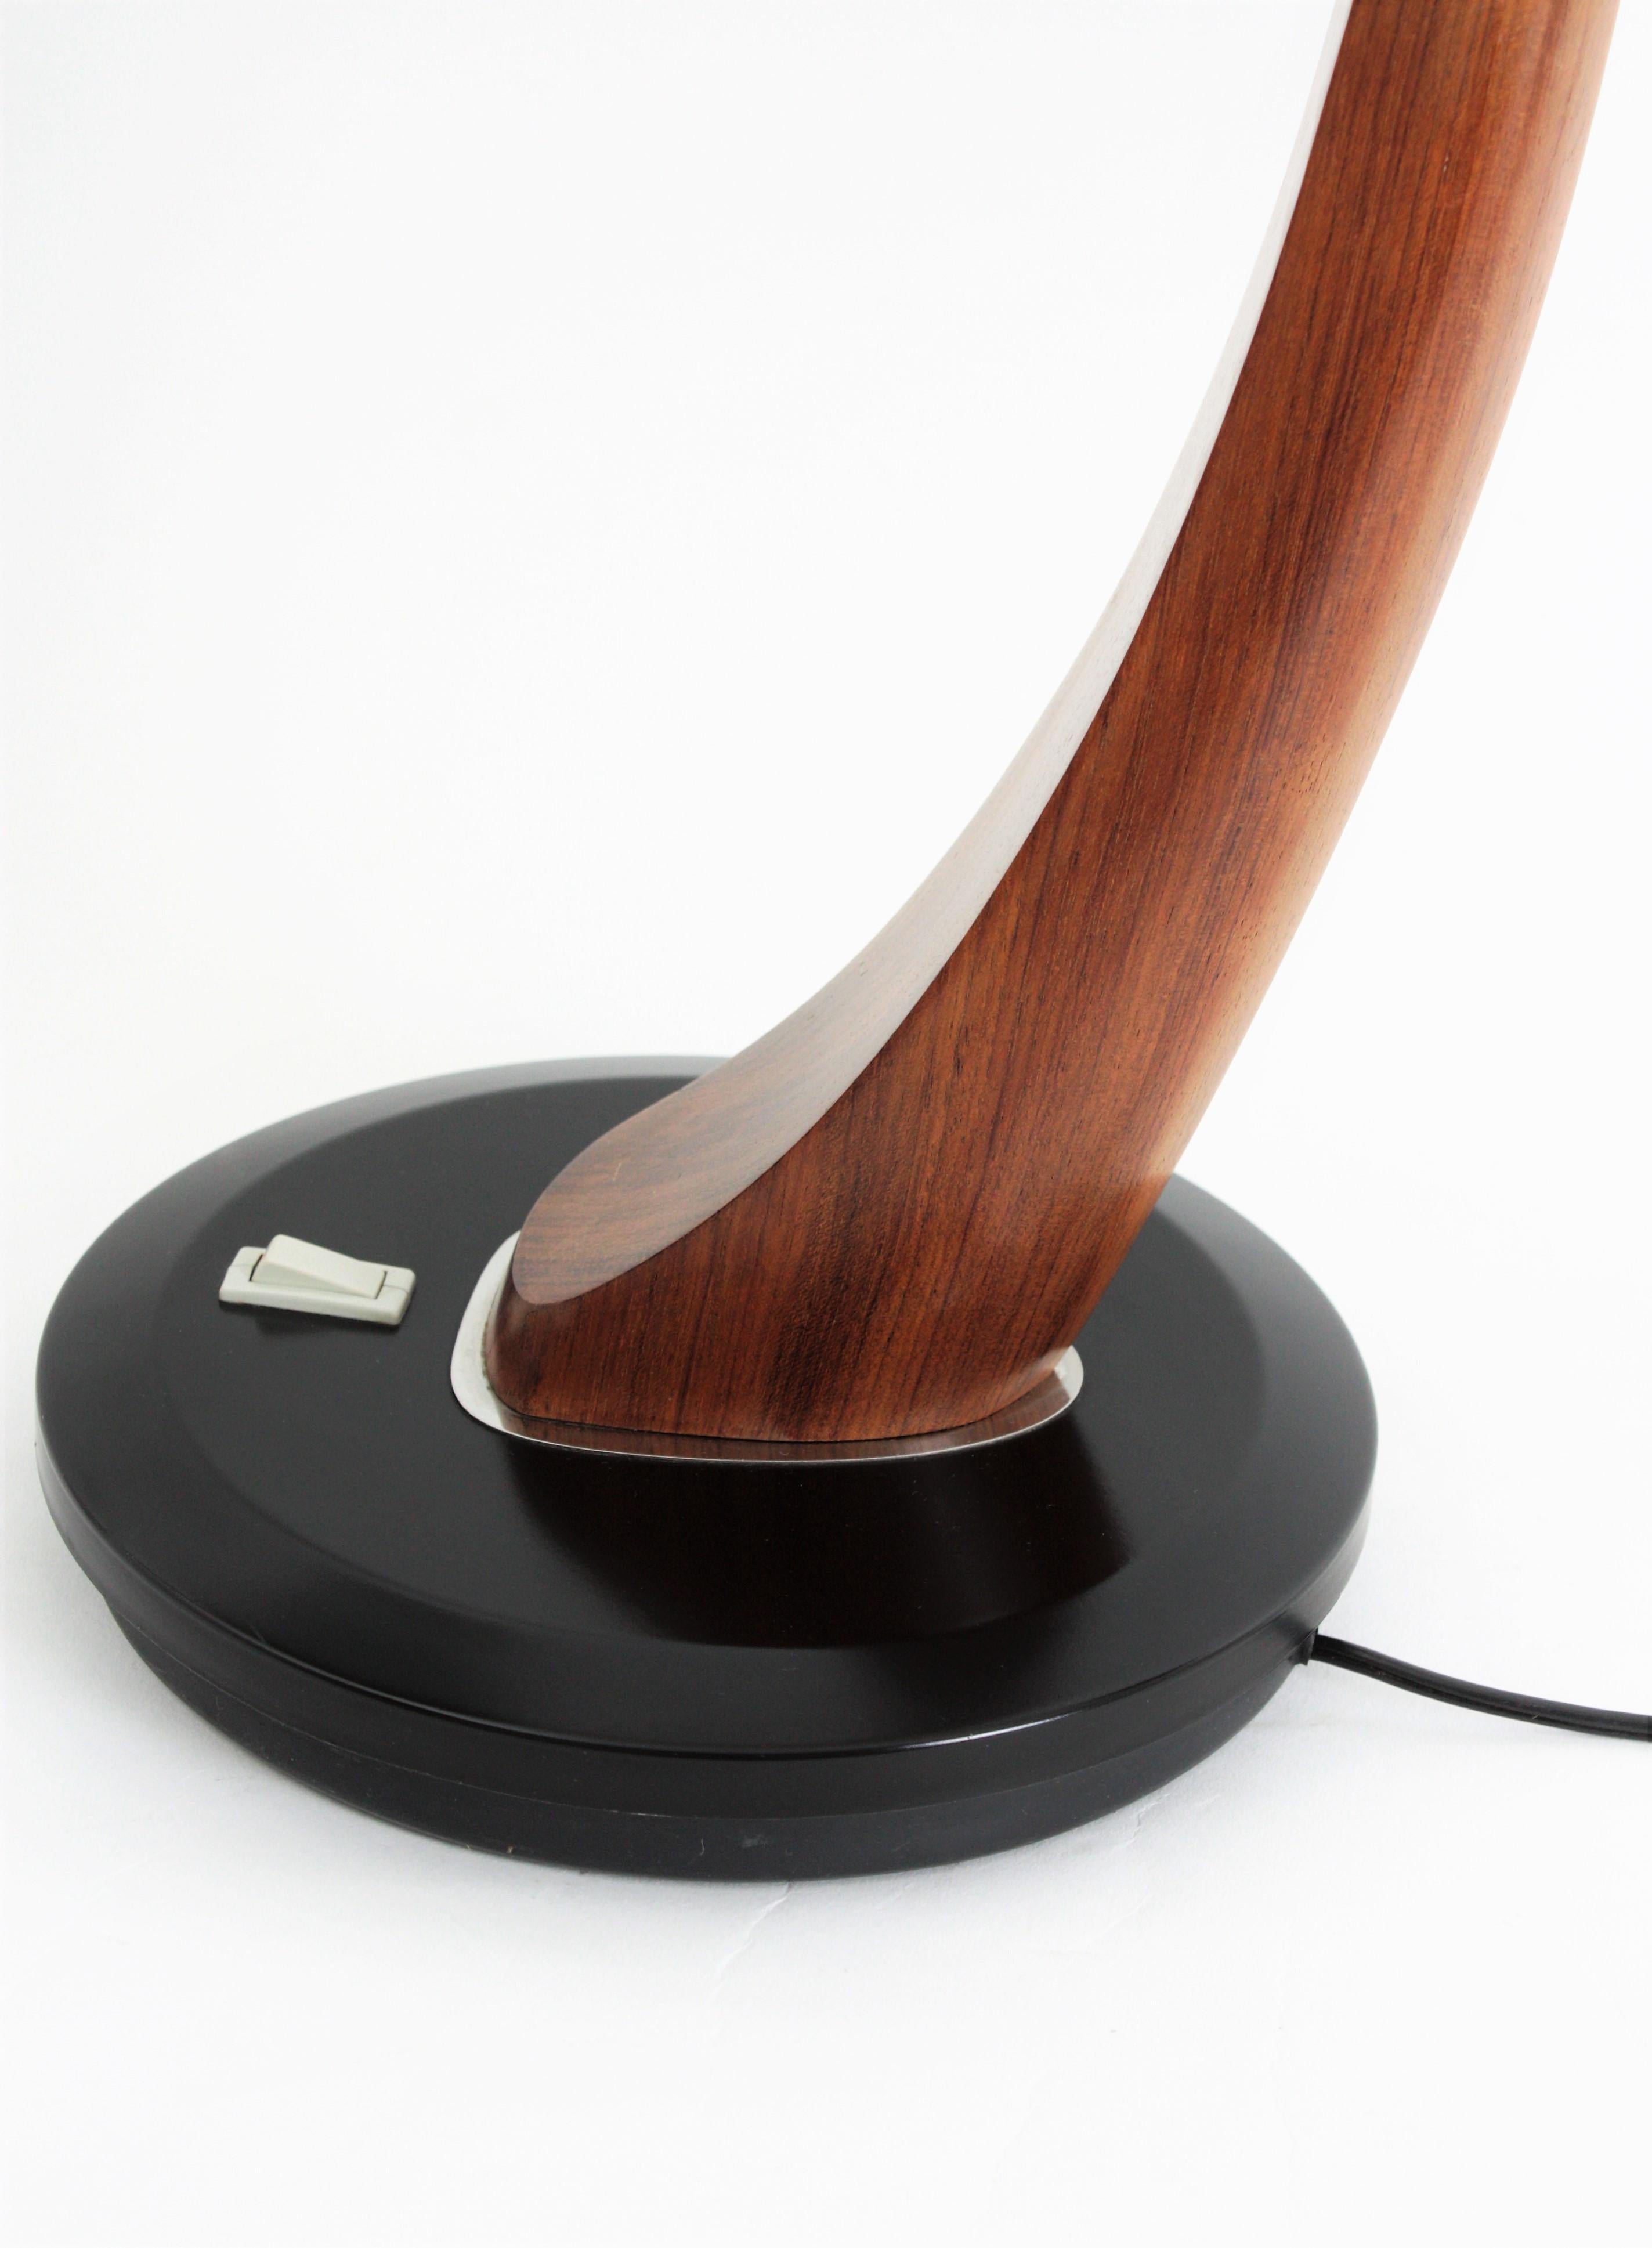 Fase President Pendulum Desk Lamp in Walnut and Black Lacquer 5